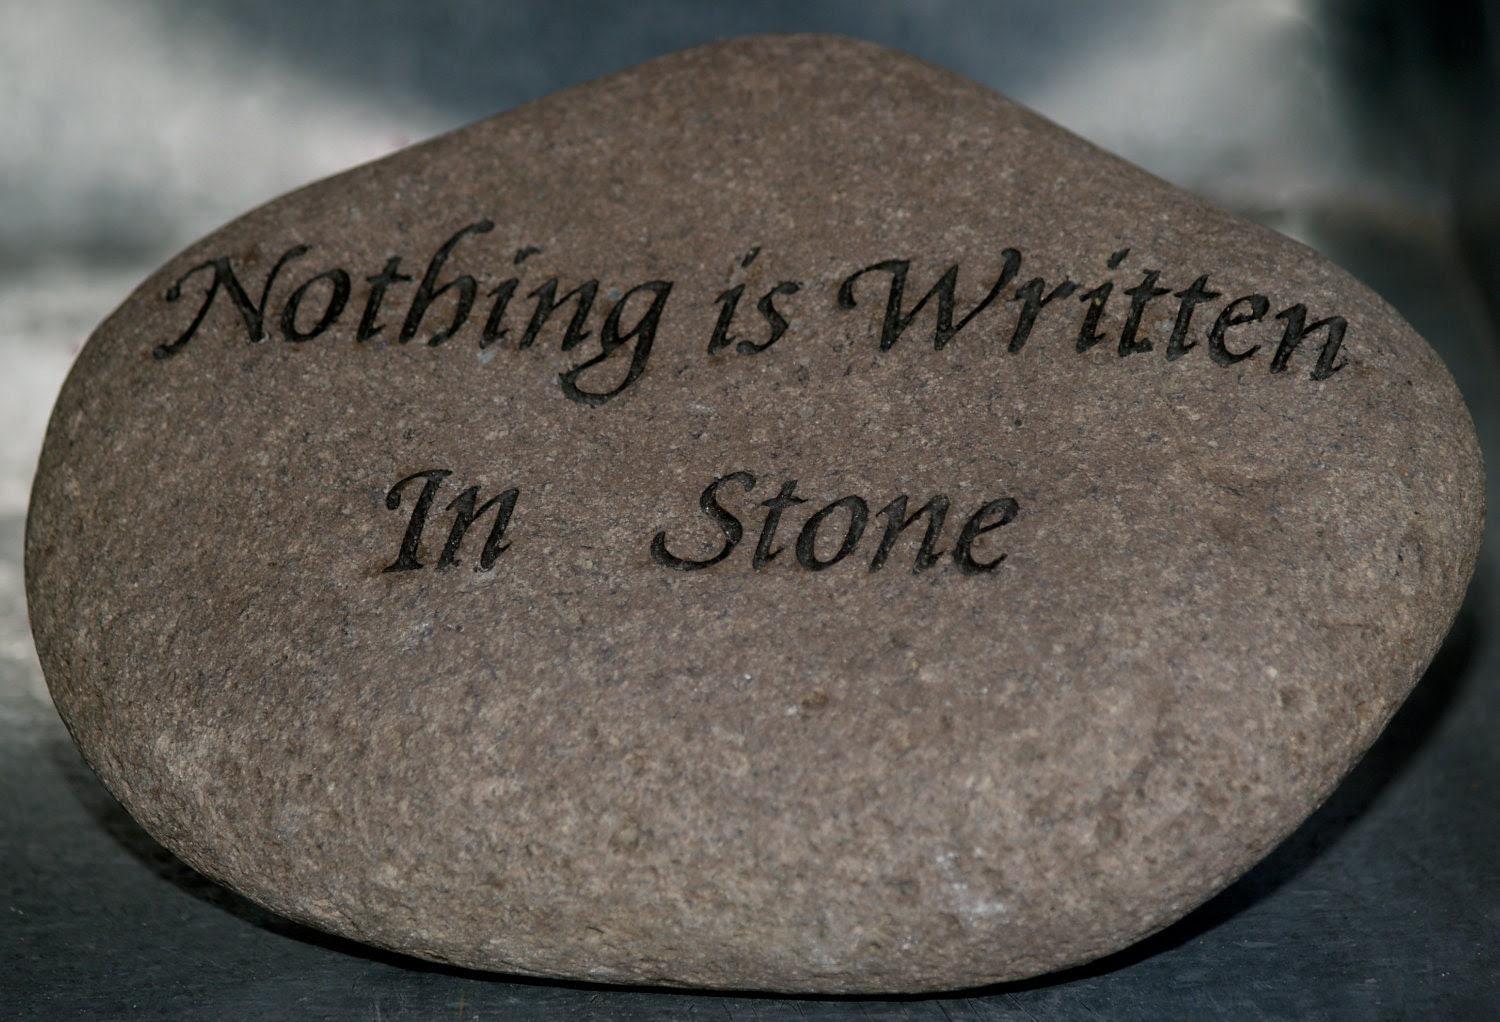 In Stone. Write on Stone. Nothing is written. Село Нинстинц writing on Stone.